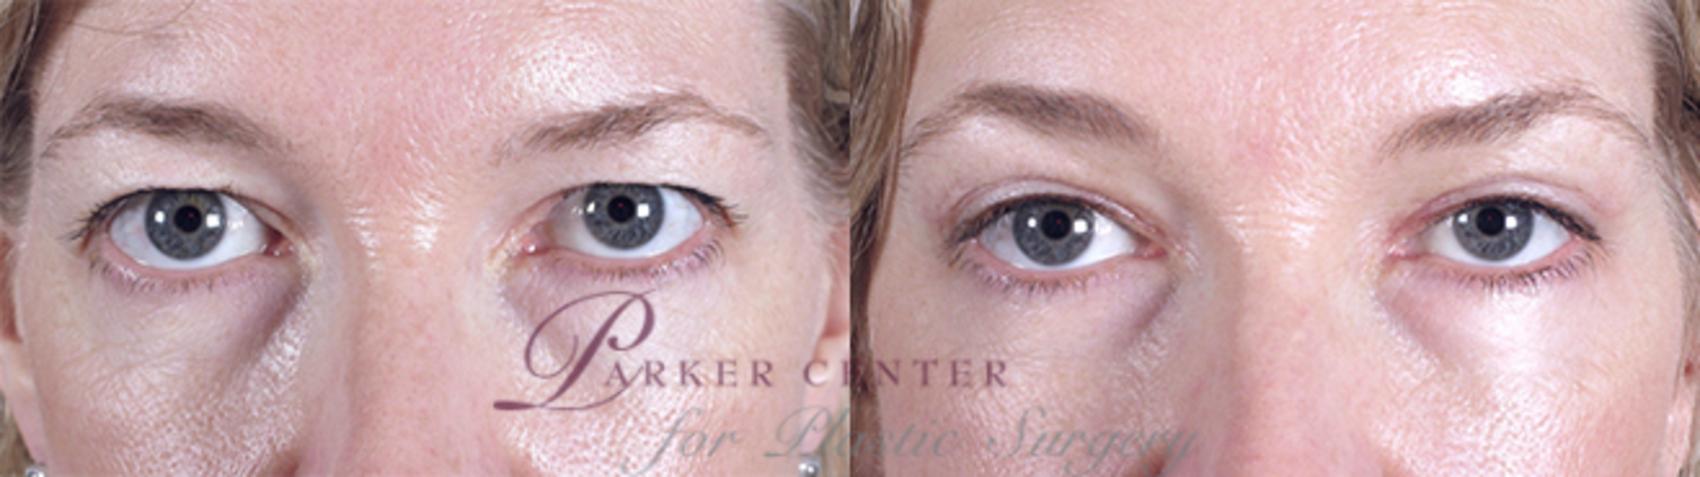 Eyelid Lift Case 72 Before & After View #1 | Paramus, NJ | Parker Center for Plastic Surgery